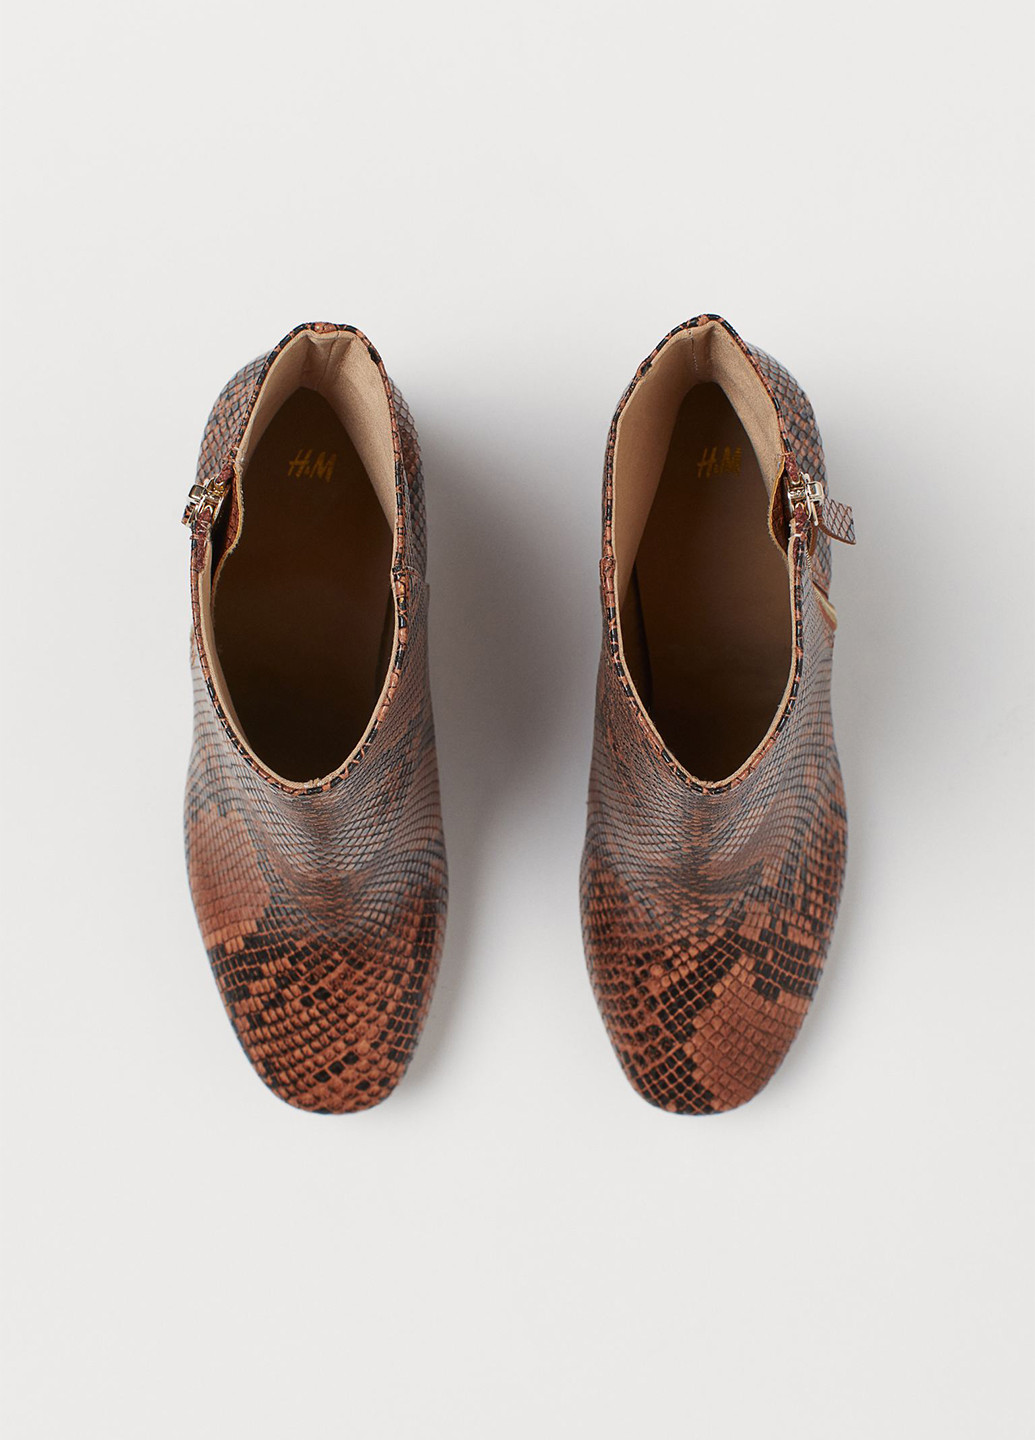 Осенние ботинки H&M без декора из полиуретана